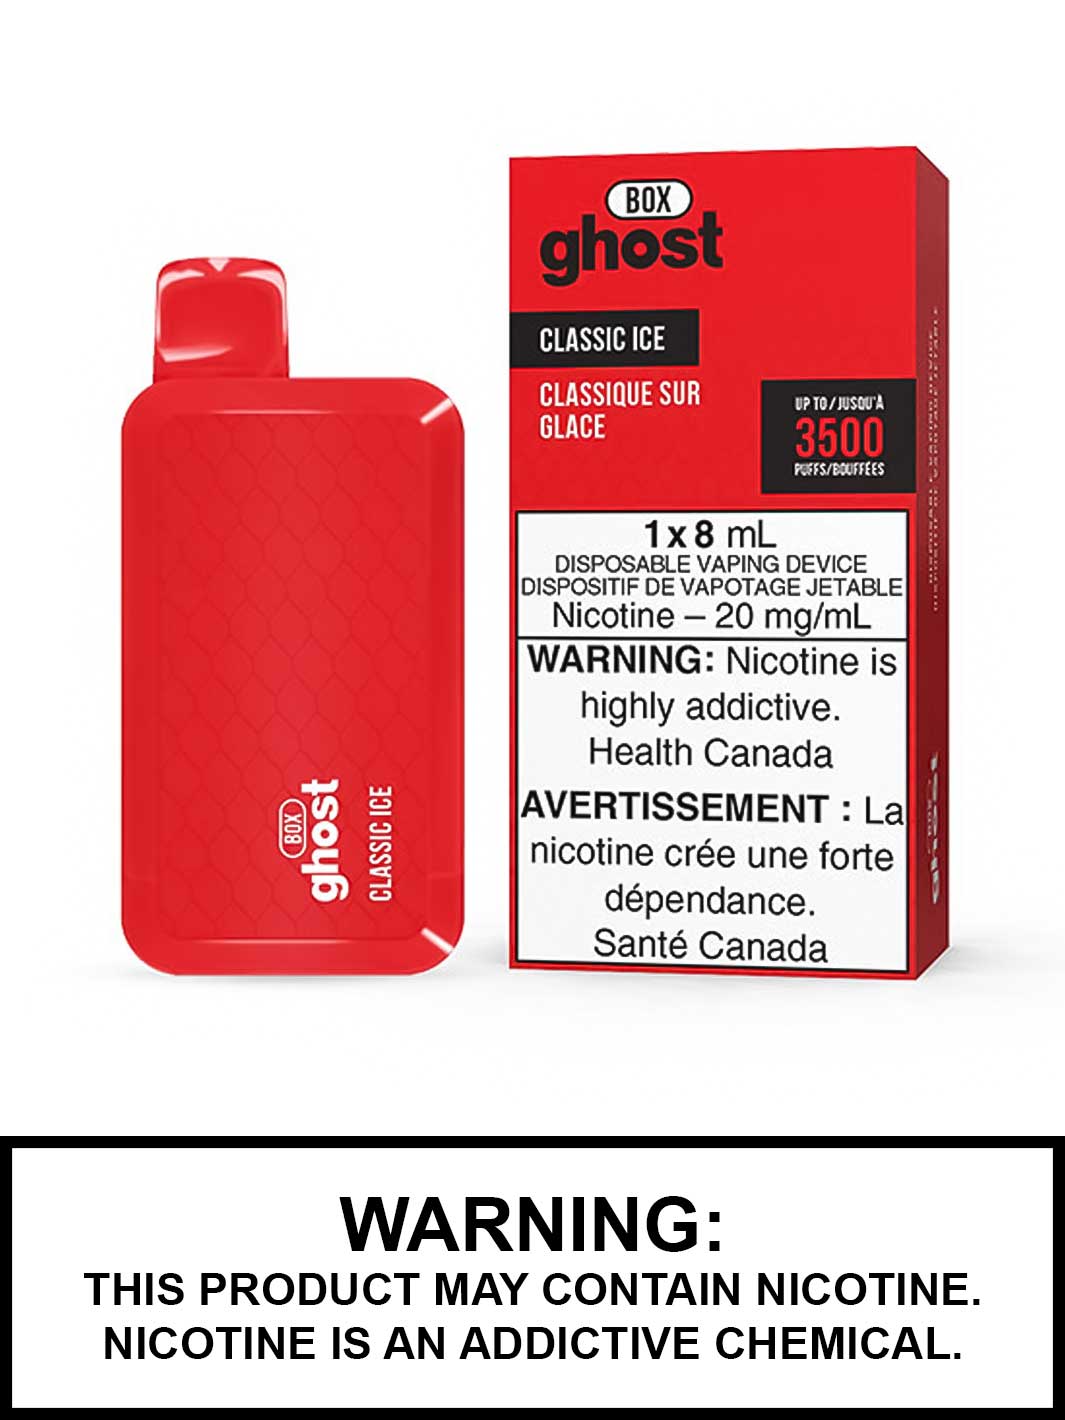 Classic Ice Ghost Box Disposable Vape, Ghost Box Vape, Ghost Vape, Vape360 Canada